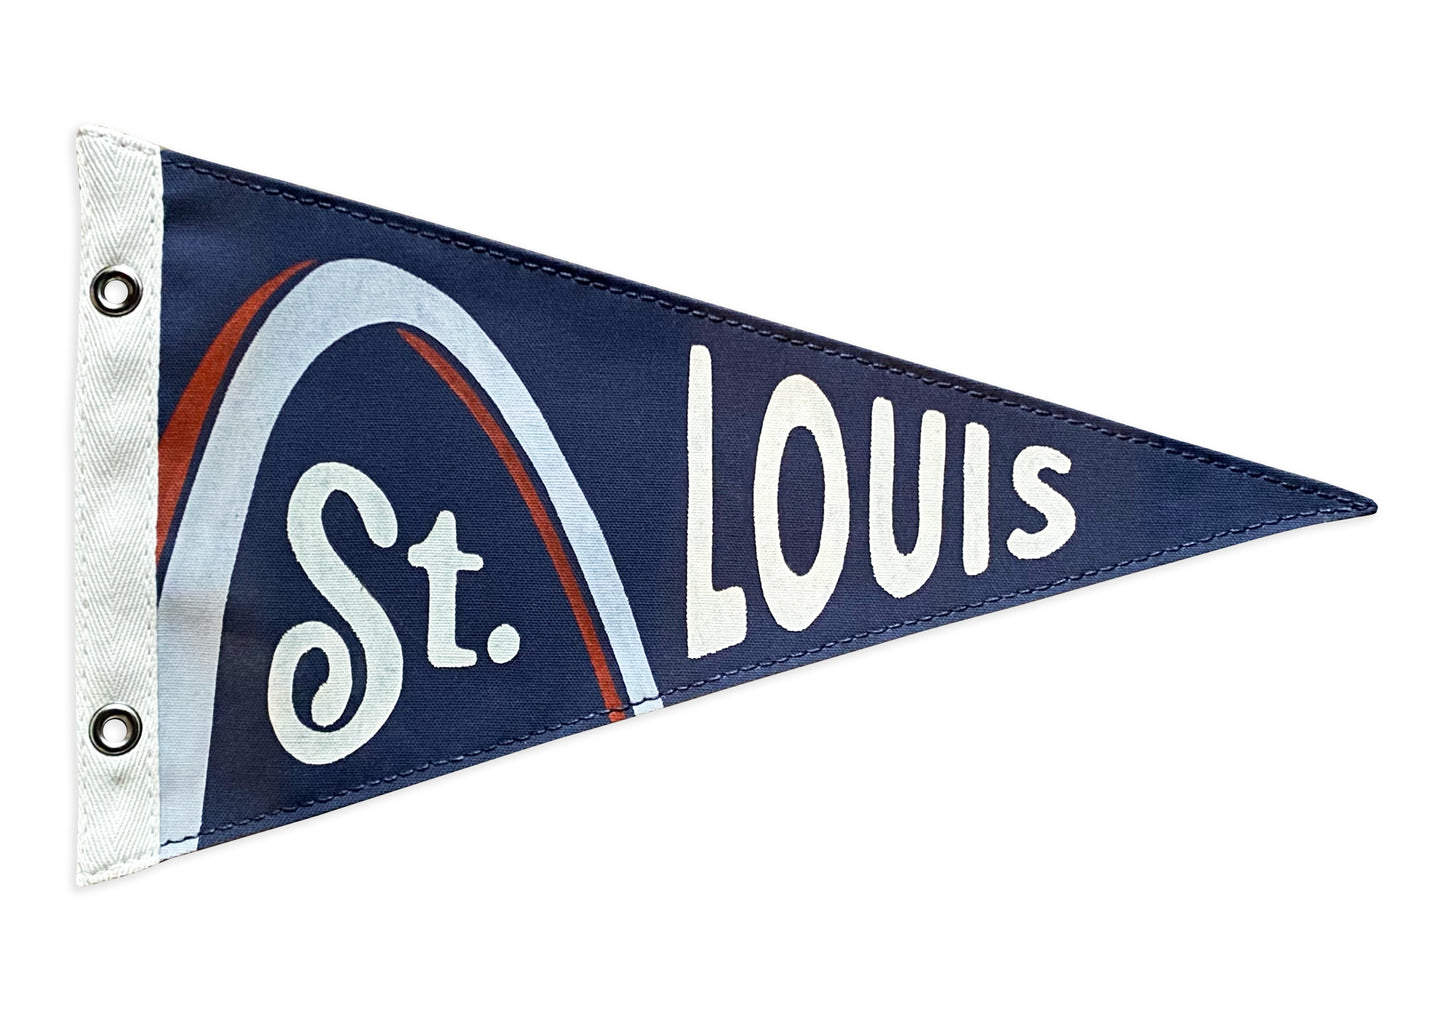 St. Louis Vintage-Inspired Pennant